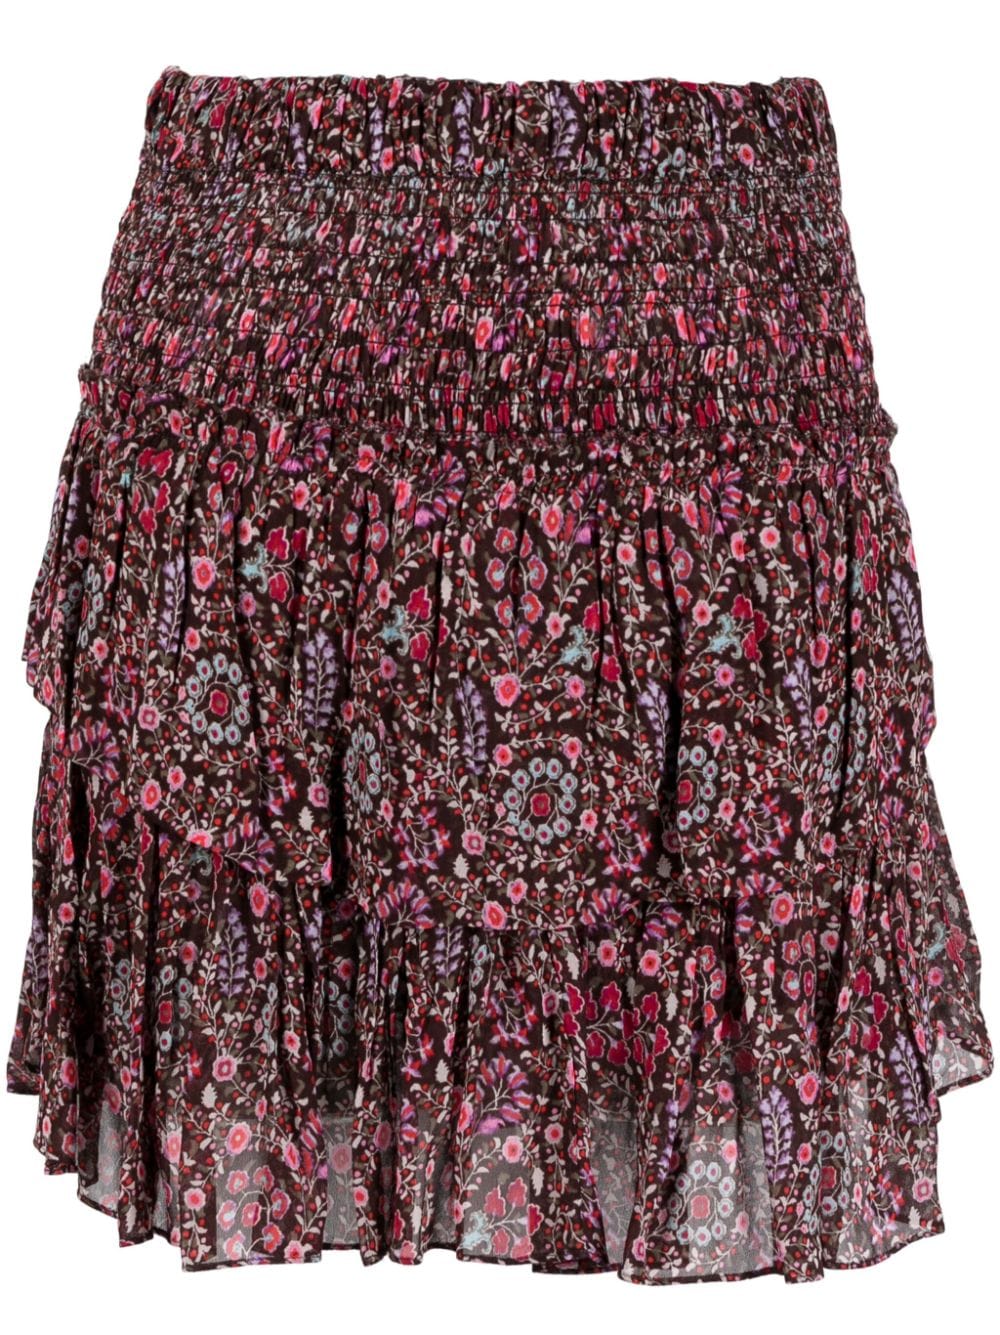 Image 1 of MARANT ÉTOILE Naomi organic cotton floral-print miniskirt